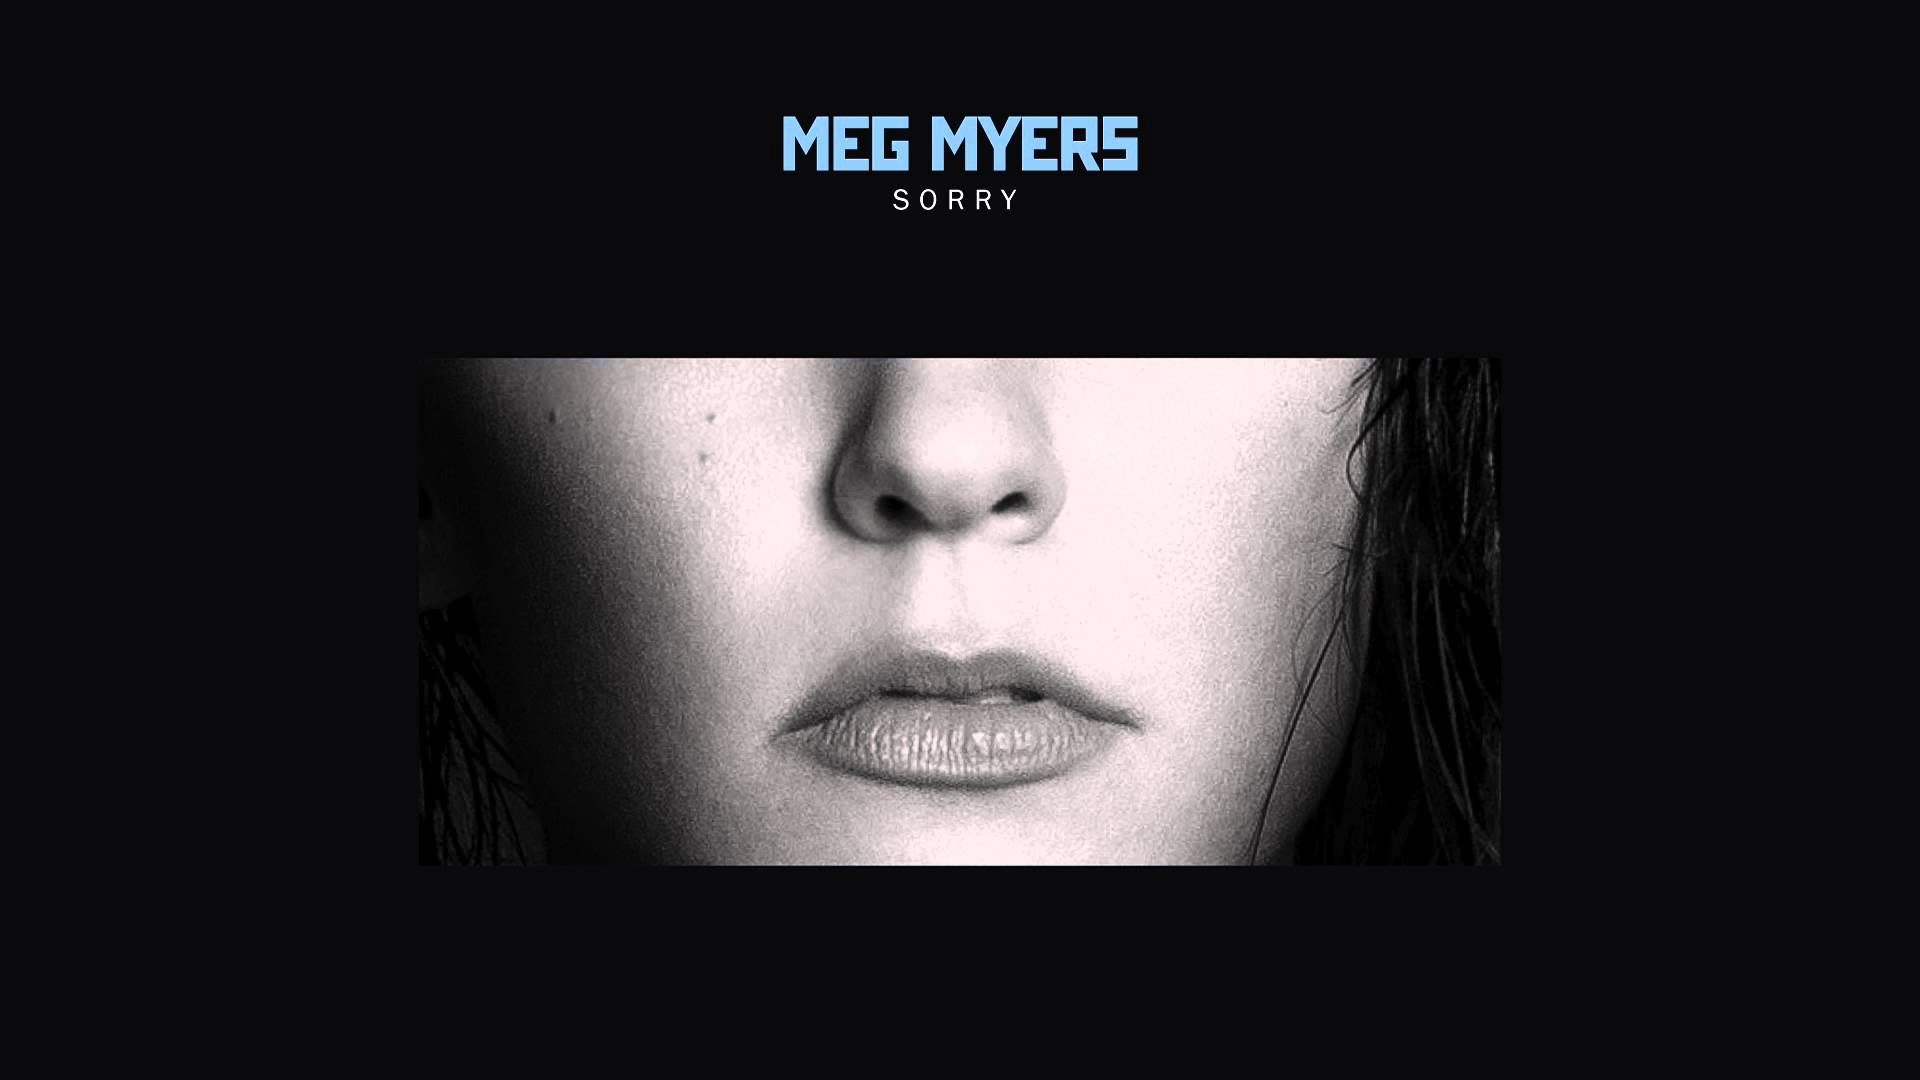 Tastes Like Rock - Meg Myers - "Sorry" Review